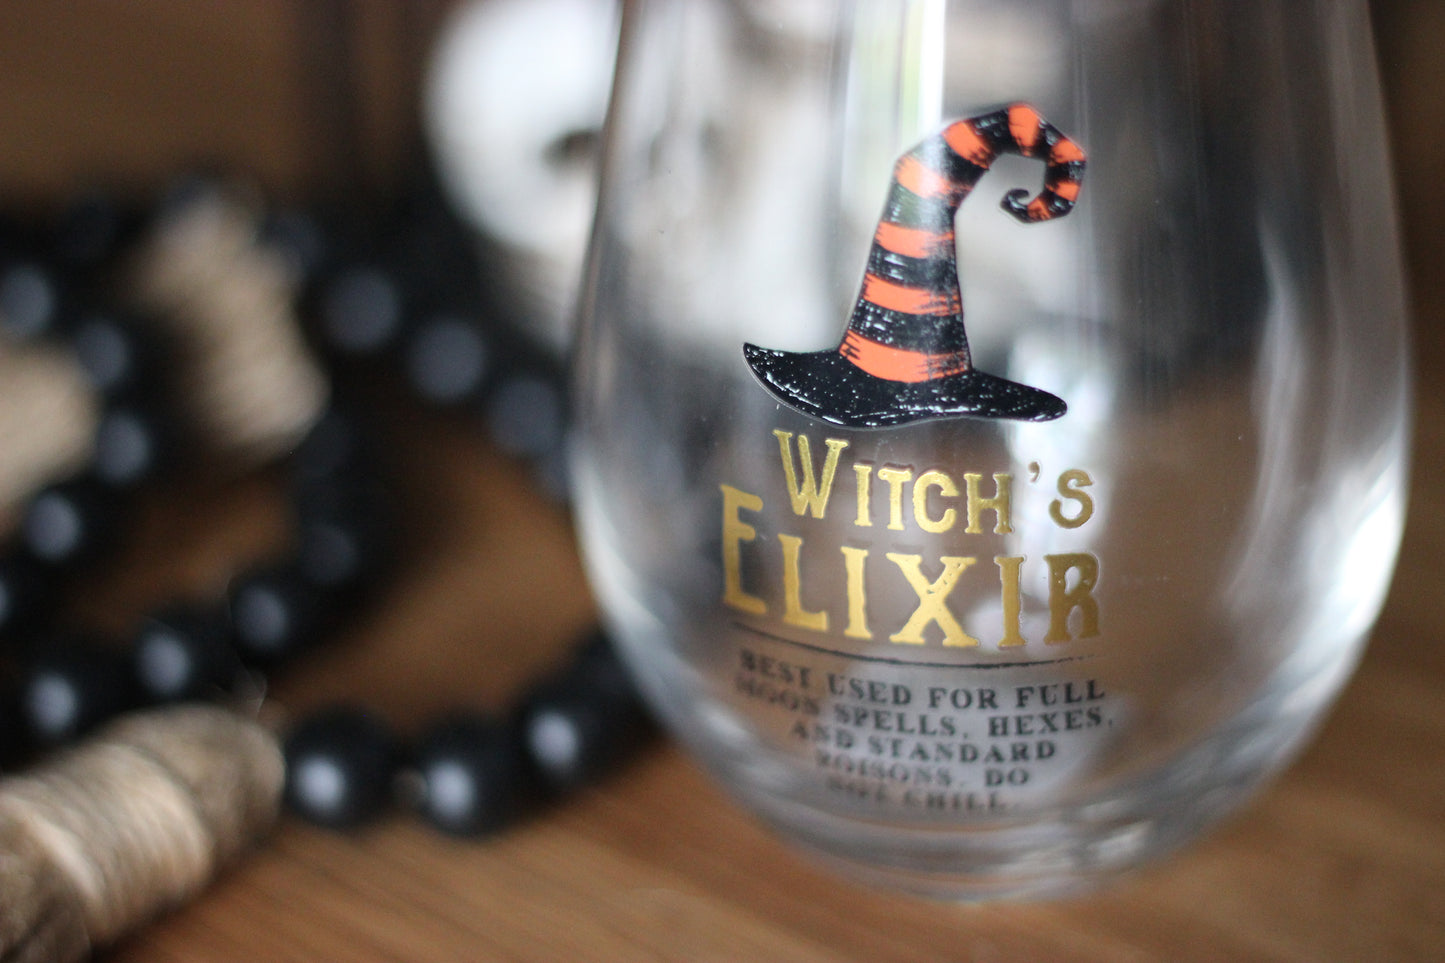 Witch's Elixir Stemless Wine Glass